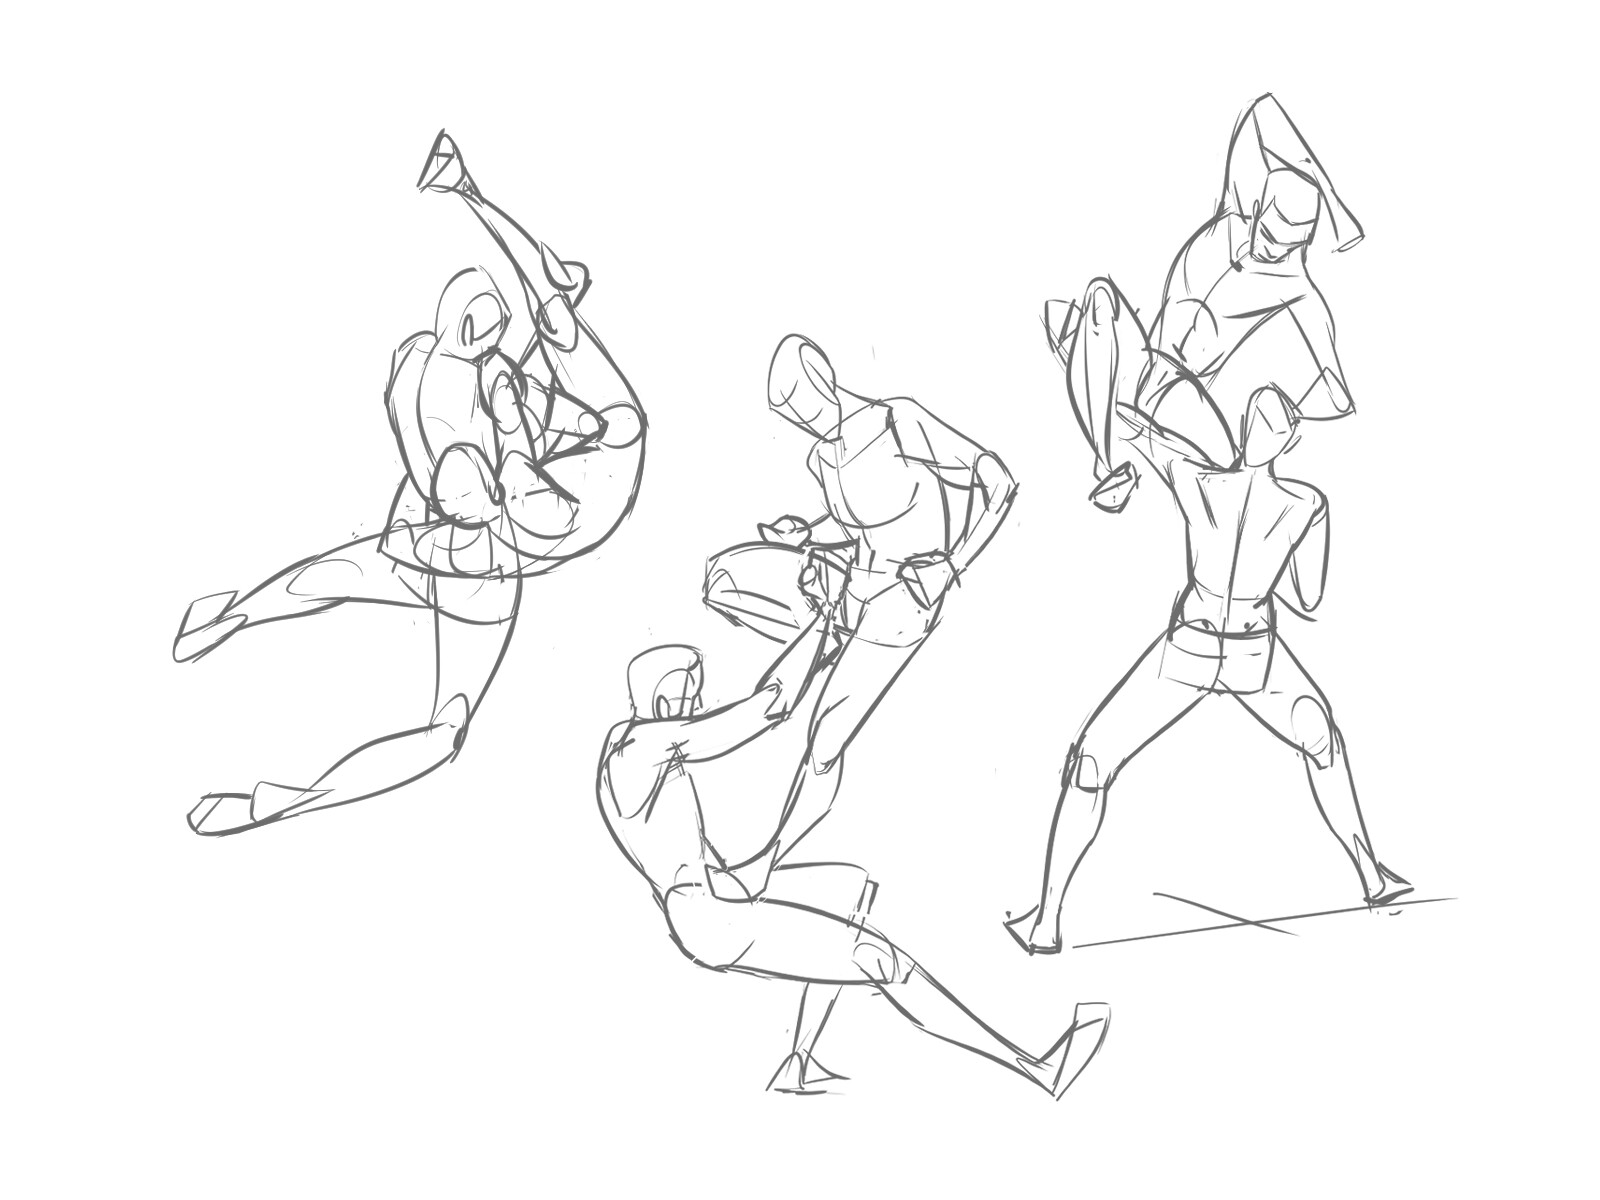 ArtStation - pose sketches